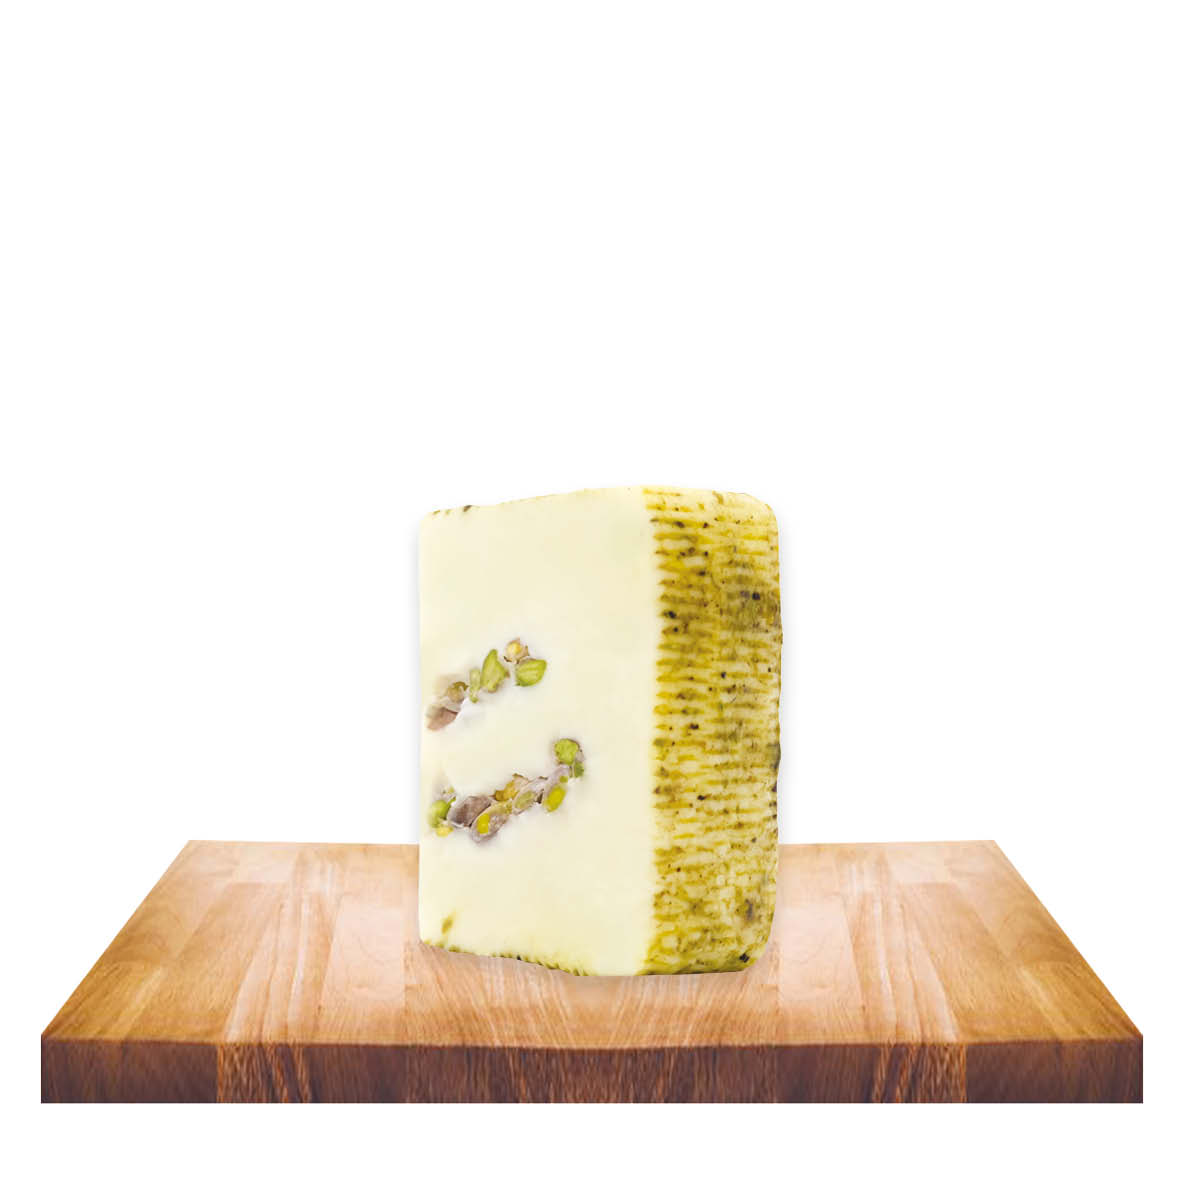 Primo Sale cheese with pistachio